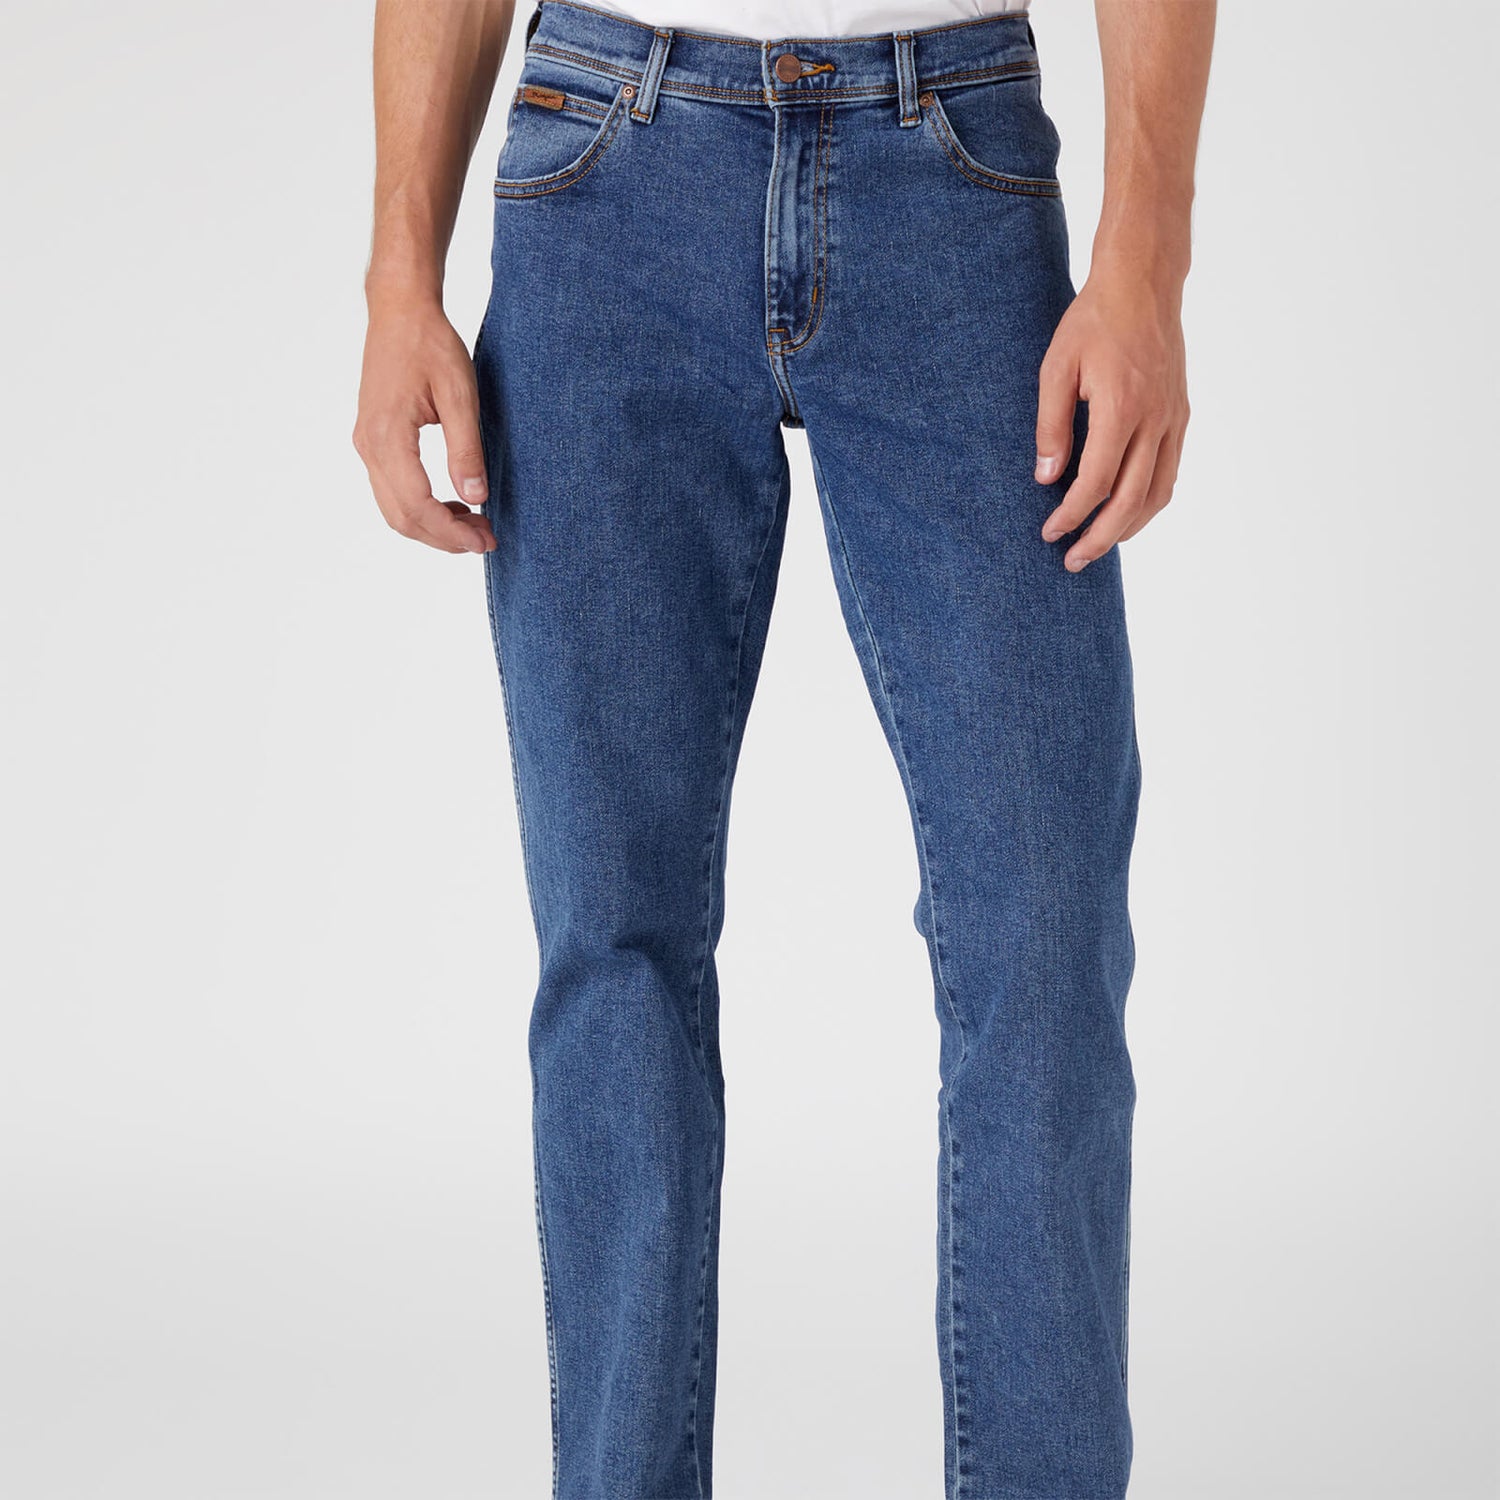 Wrangler Men's Texas Original Regular Straight Leg Jeans - Stonewash - W30/L34